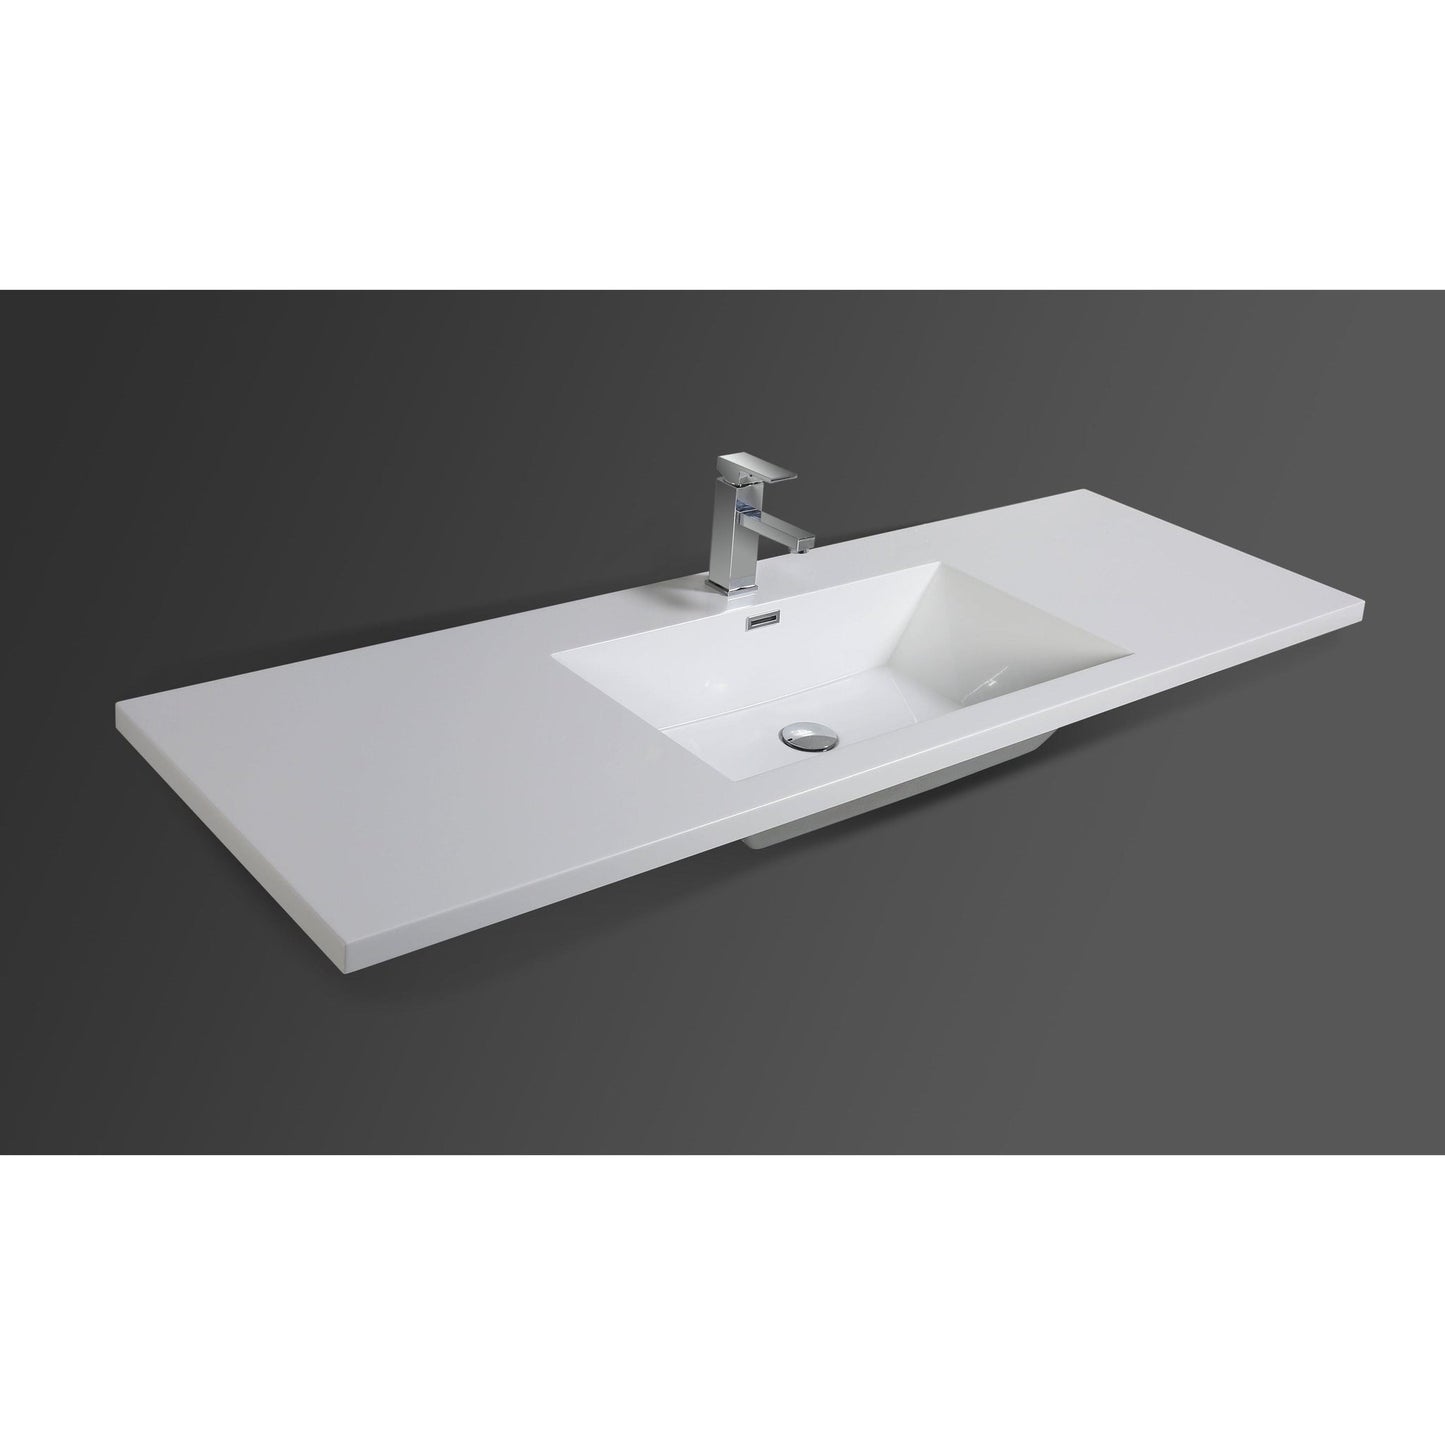 Moreno Bath Bohemia Lina 60" High Gloss White Wall-Mounted Vanity With Single Reinforced White Acrylic Sink